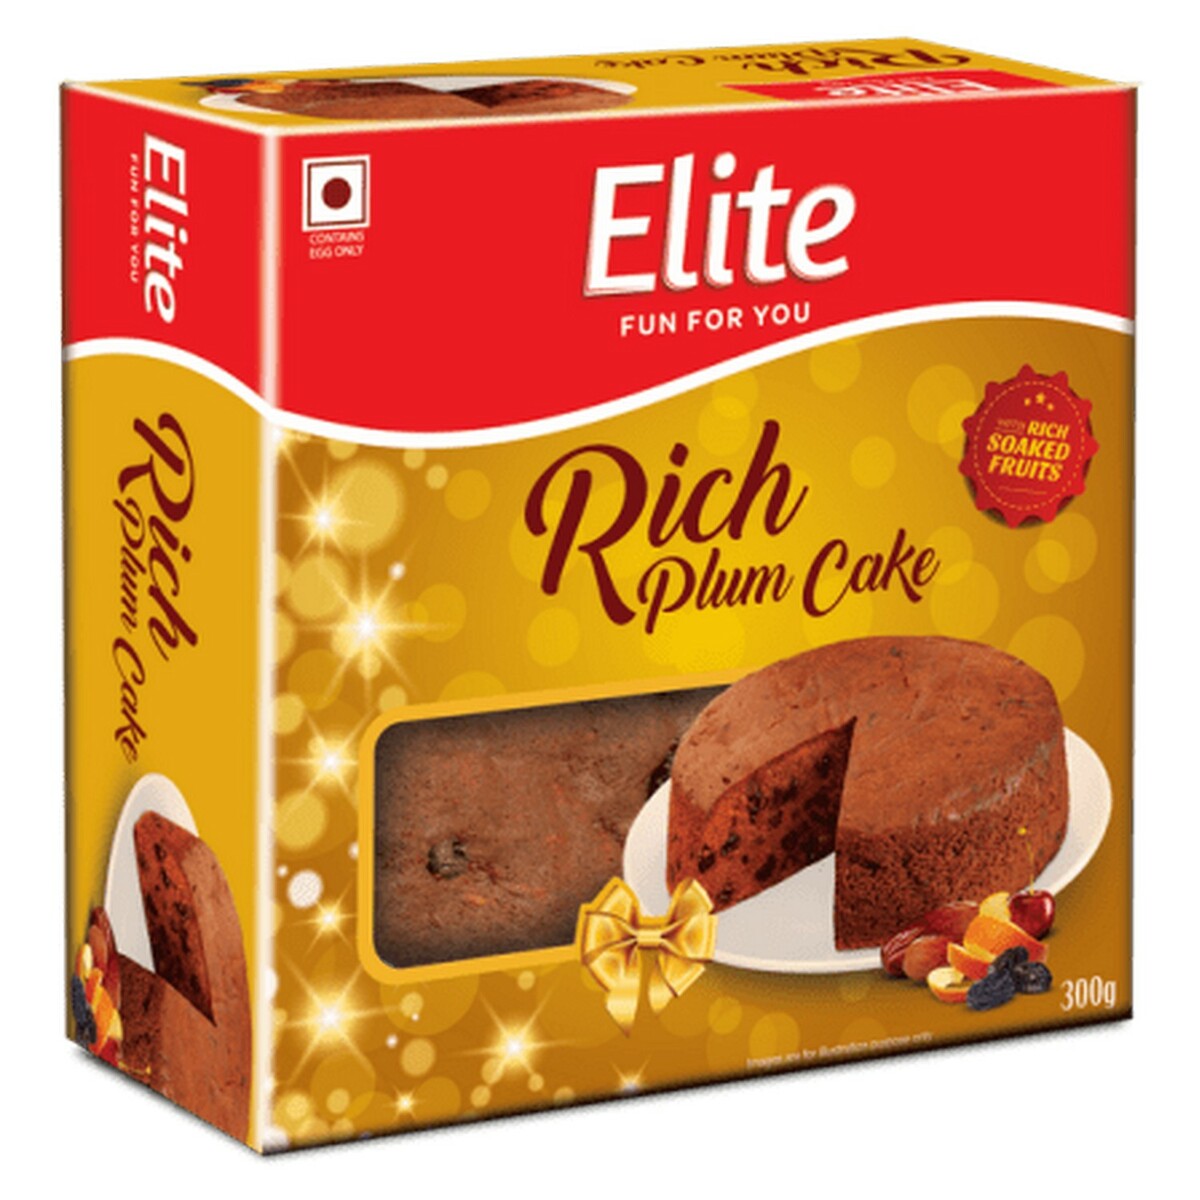 Elite Rich Plum Cake 300gm